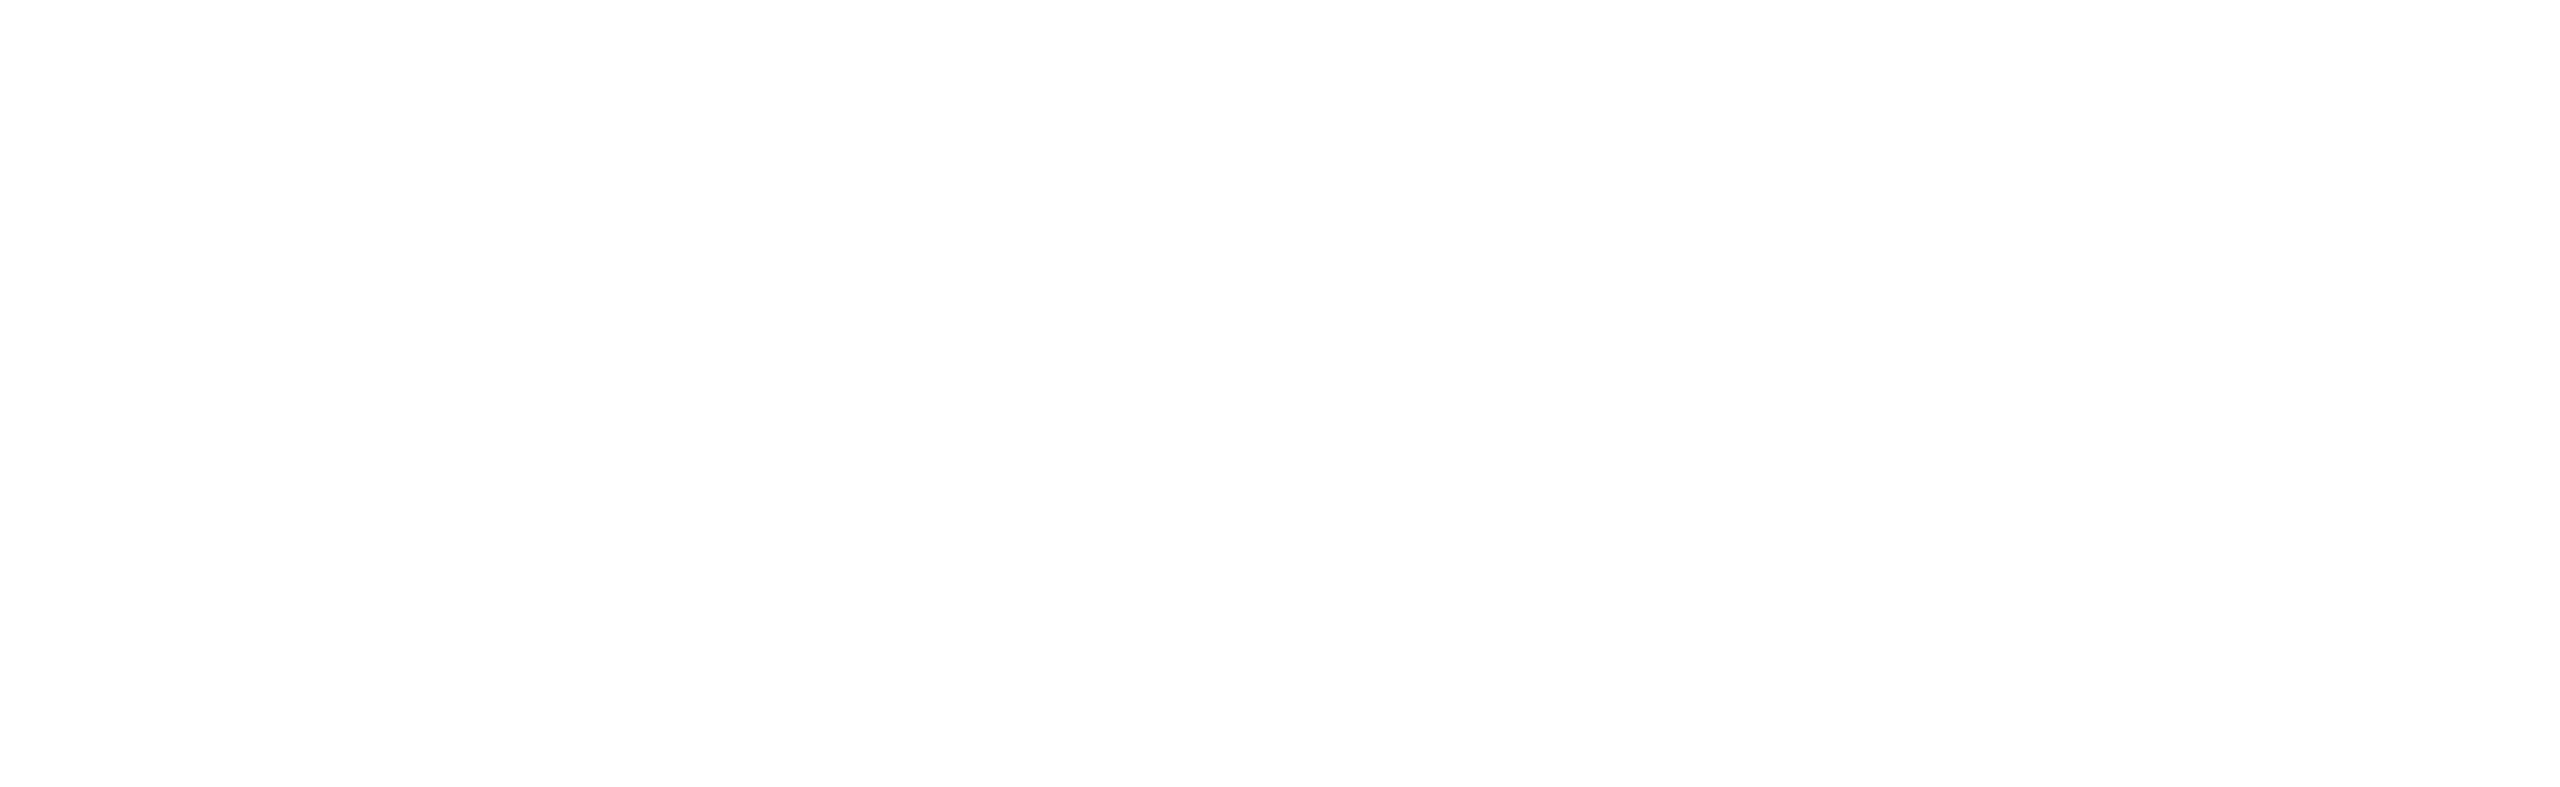 Amazon_Prime_Video_logo